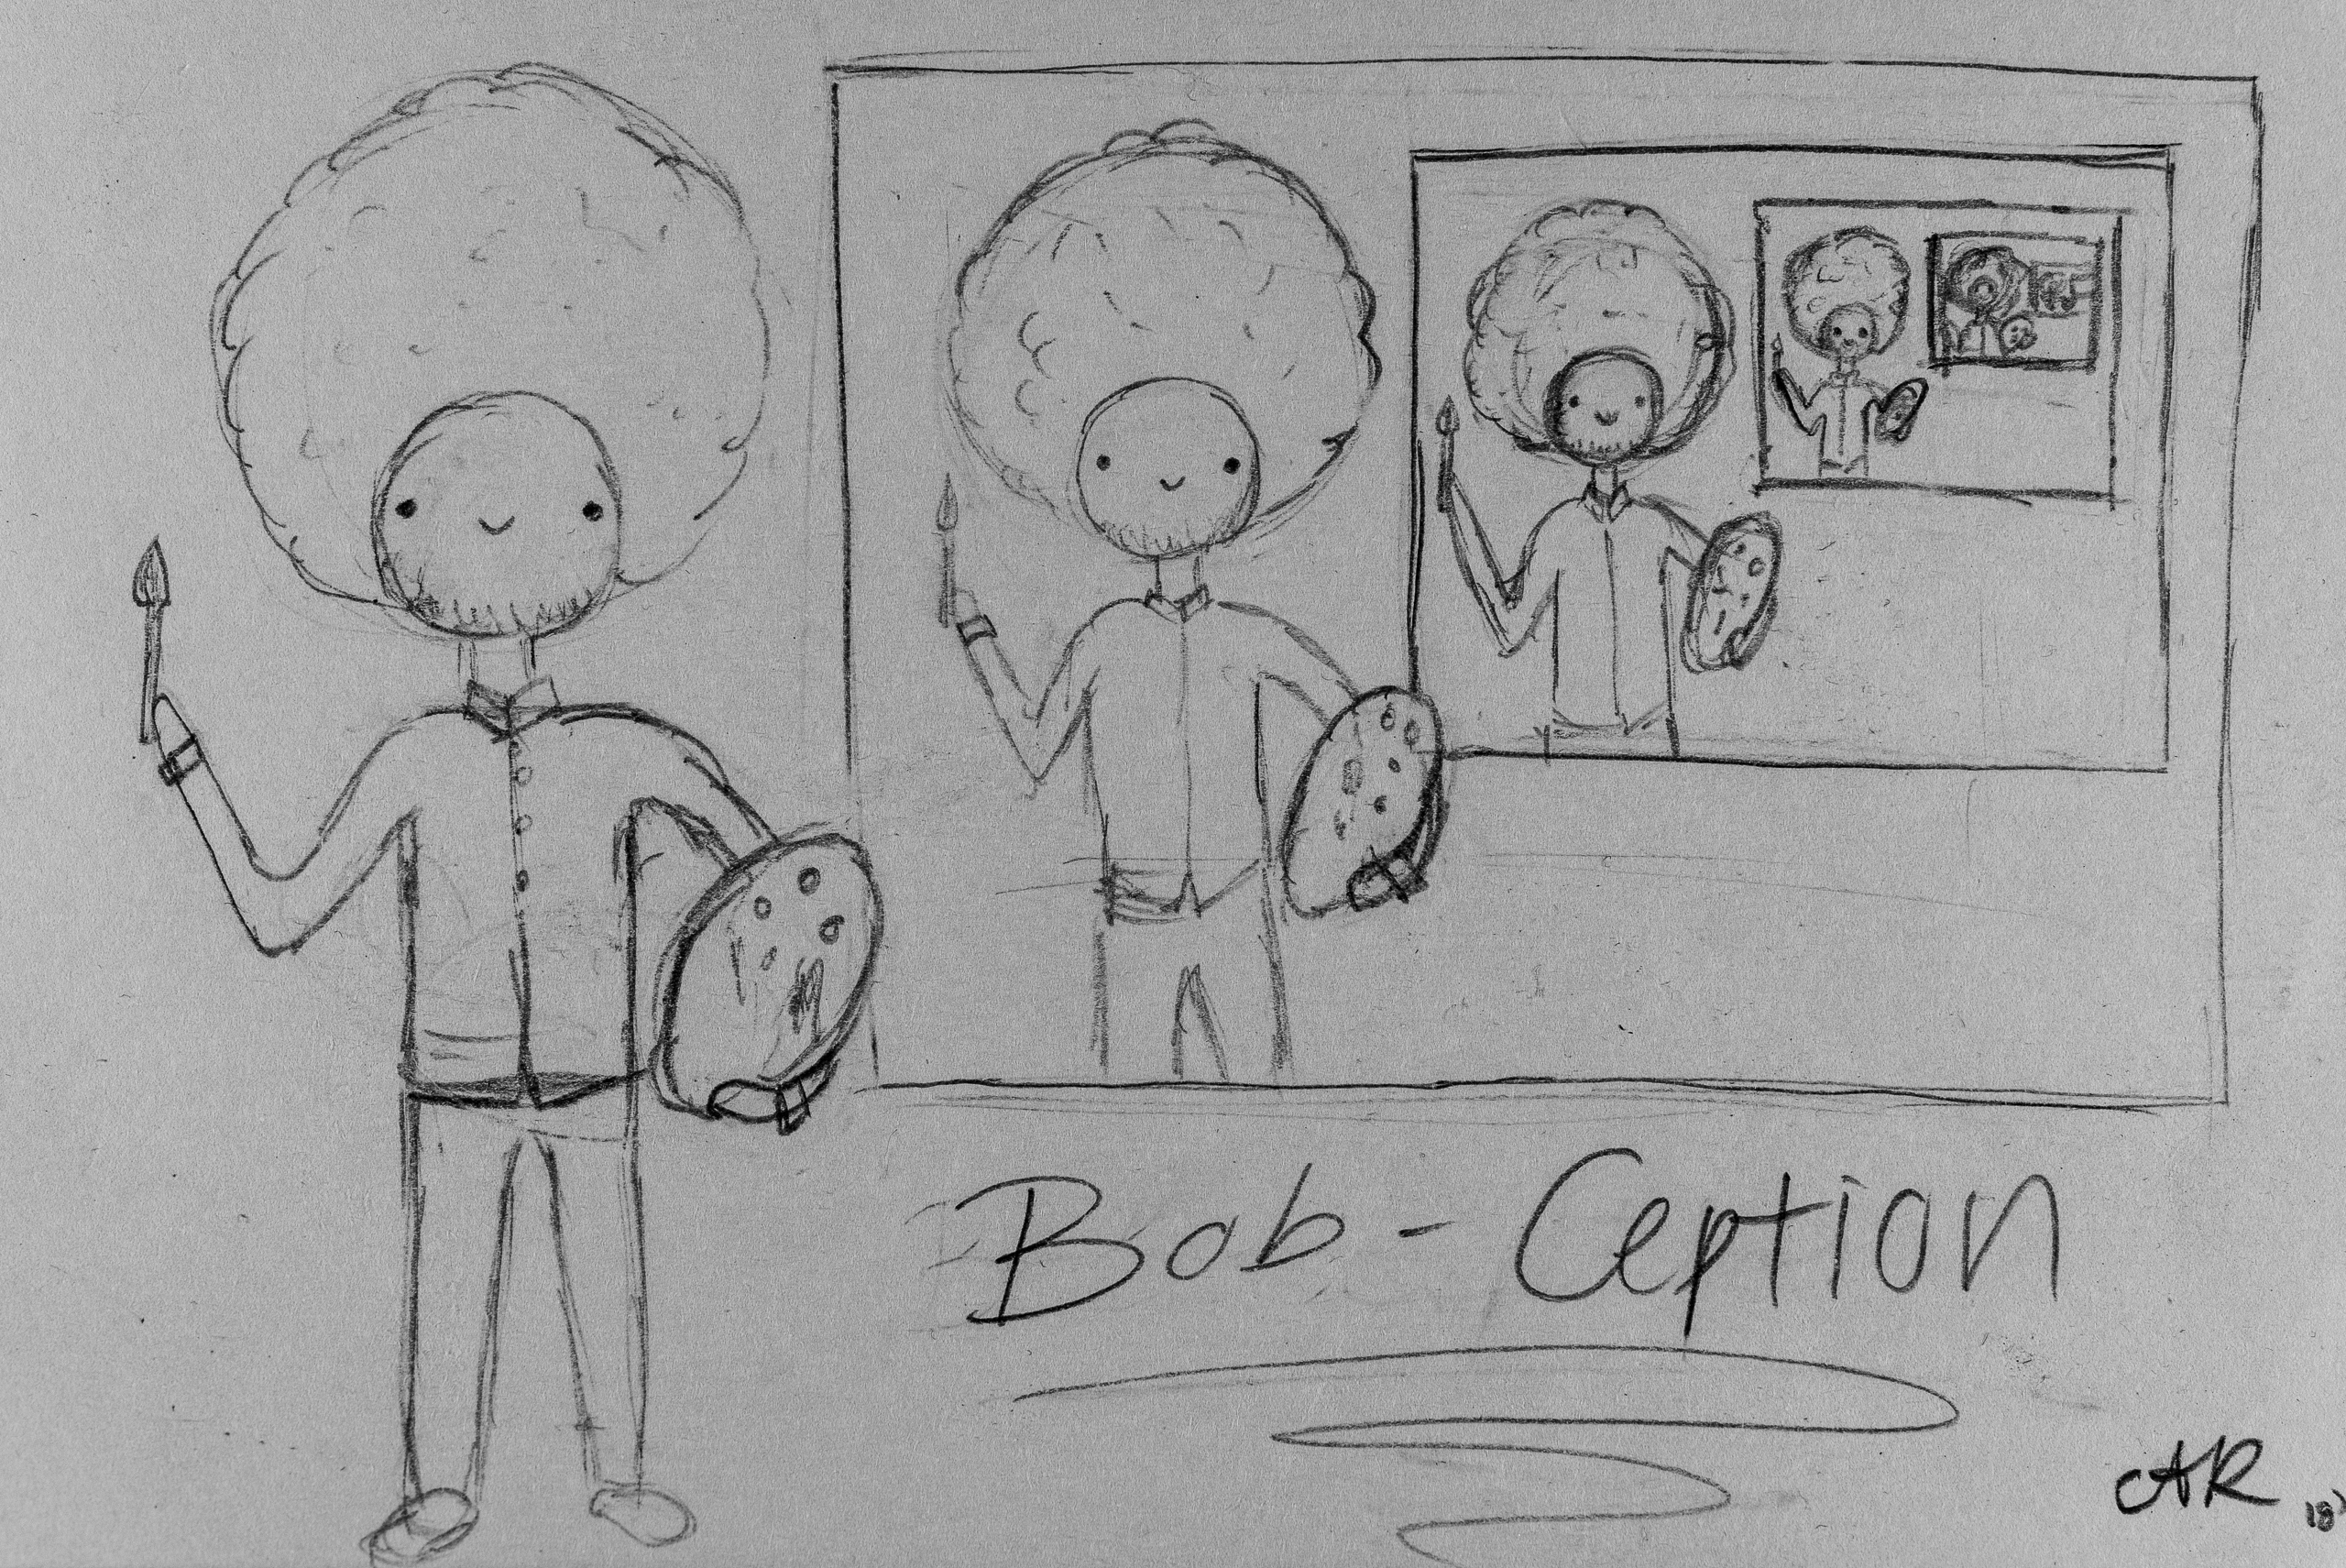 Bob-ception: Thank you